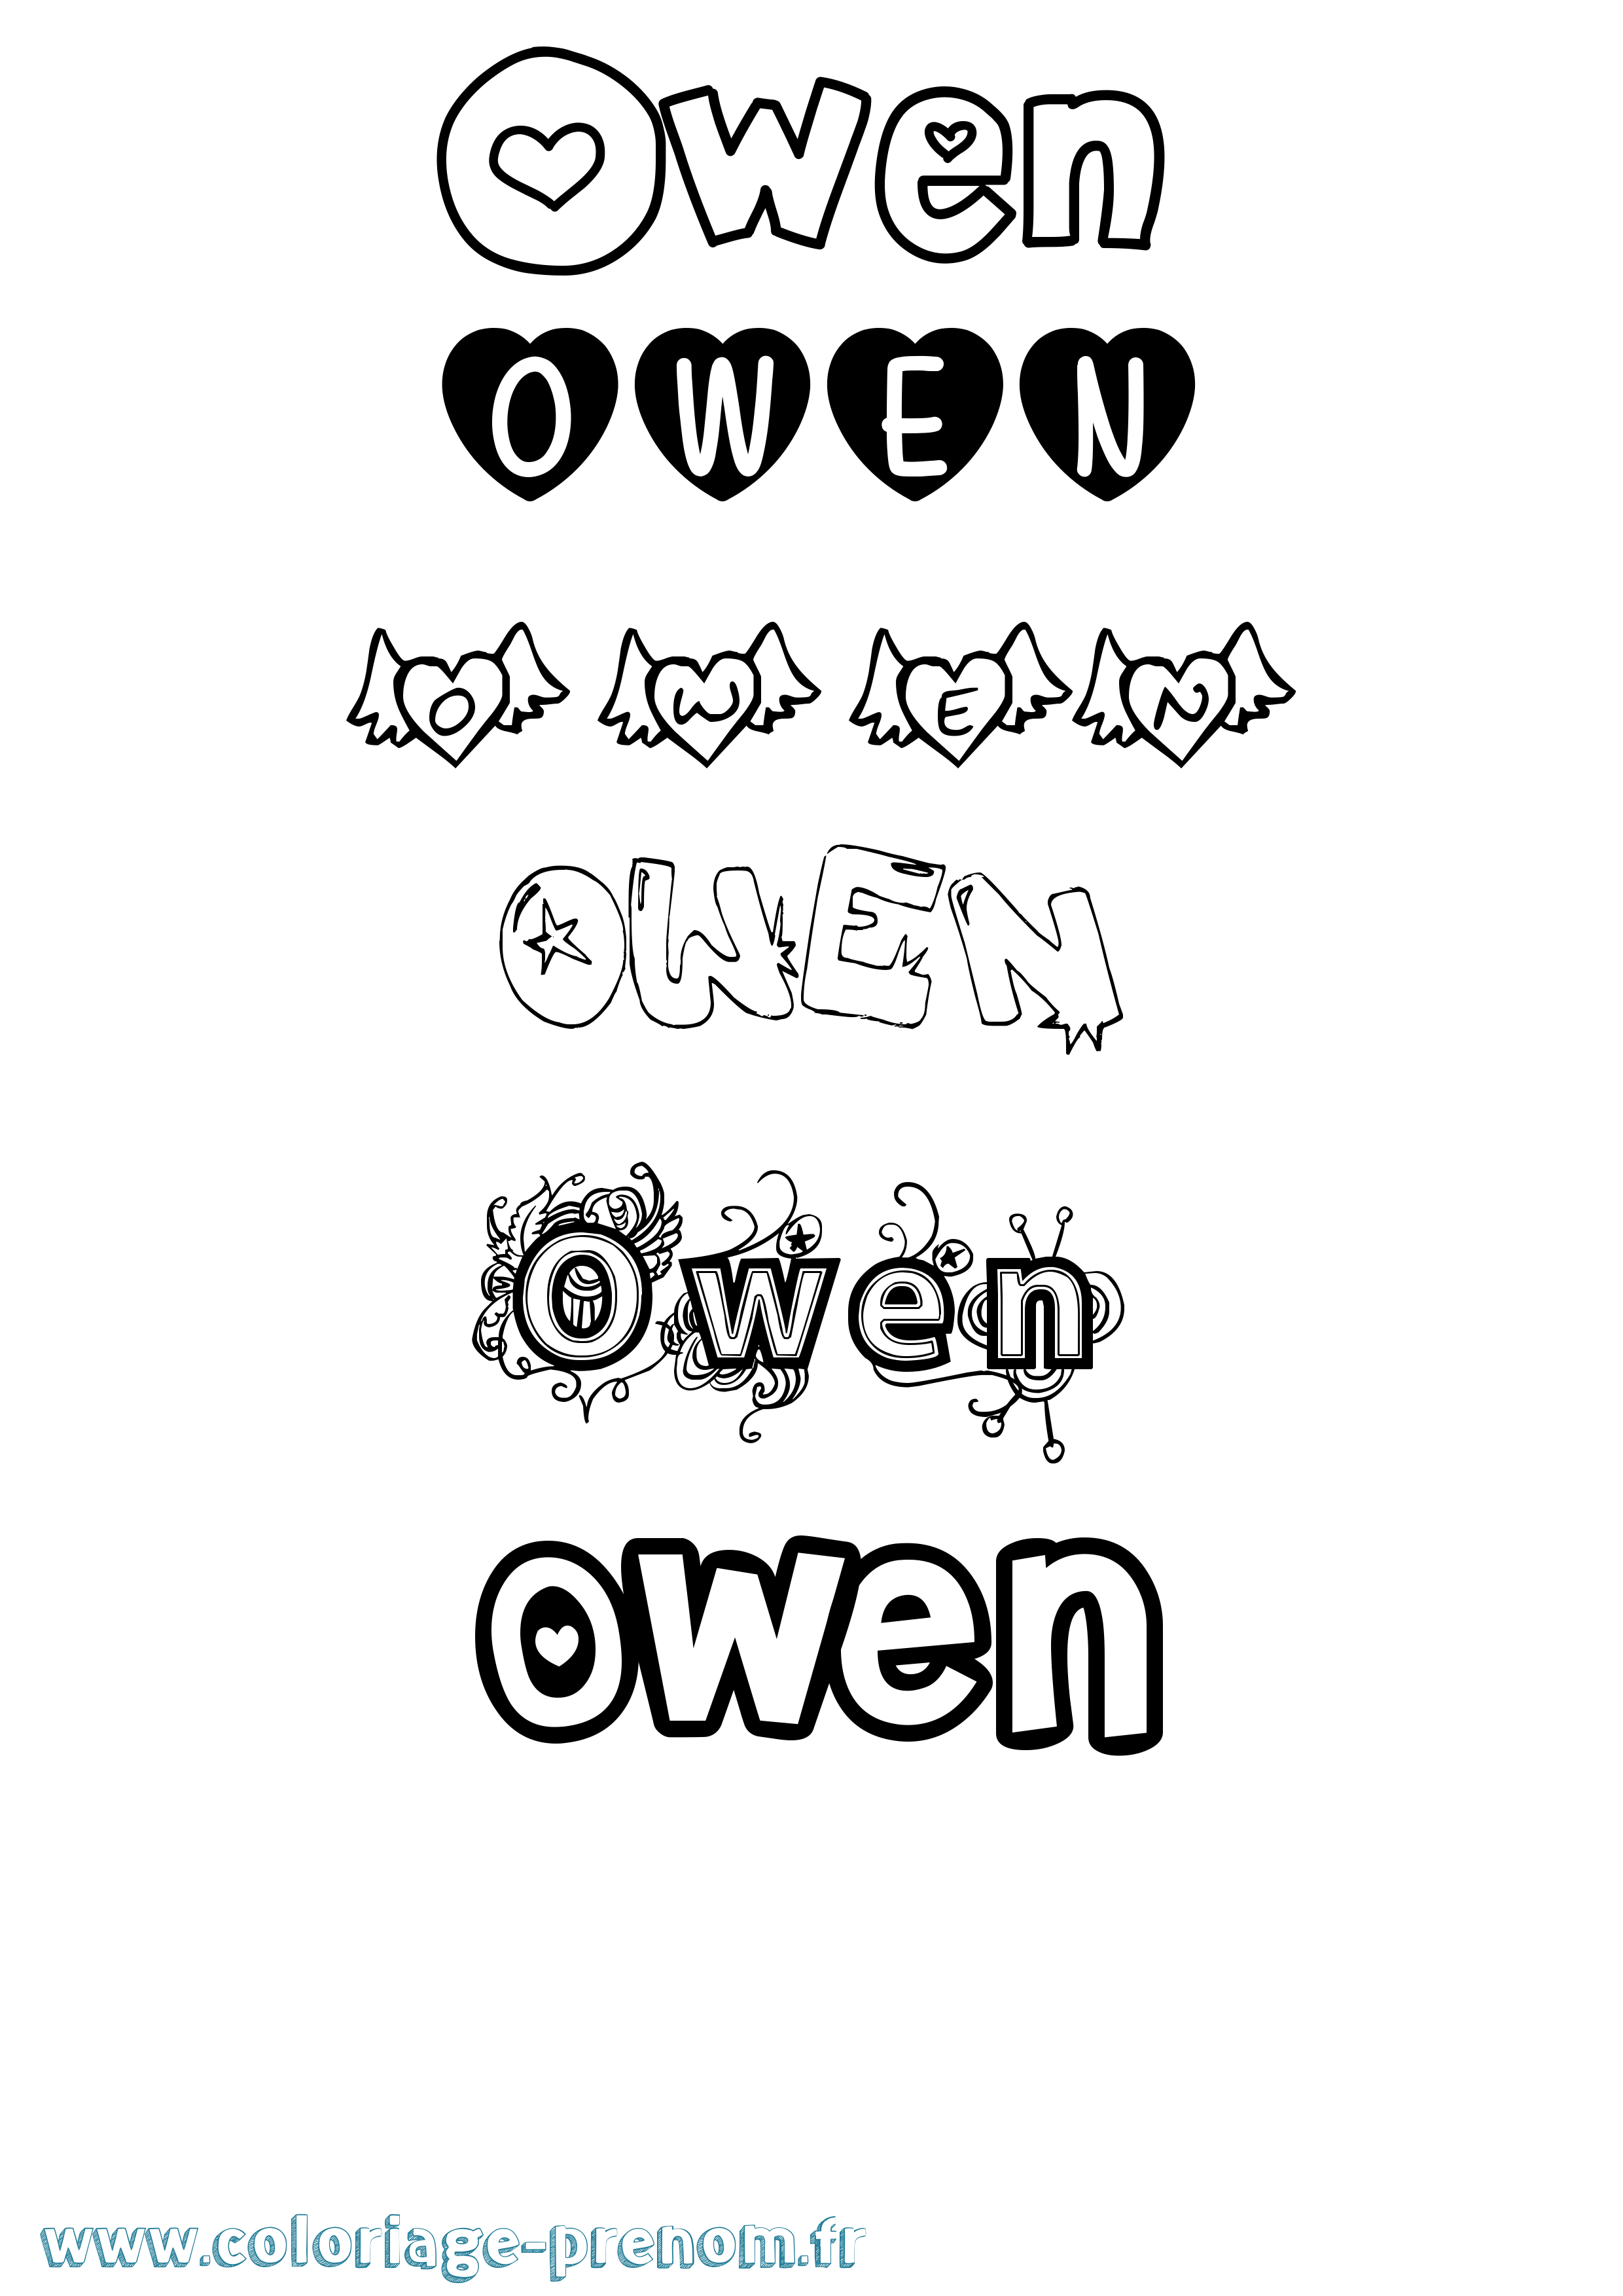 Coloriage prénom Owen